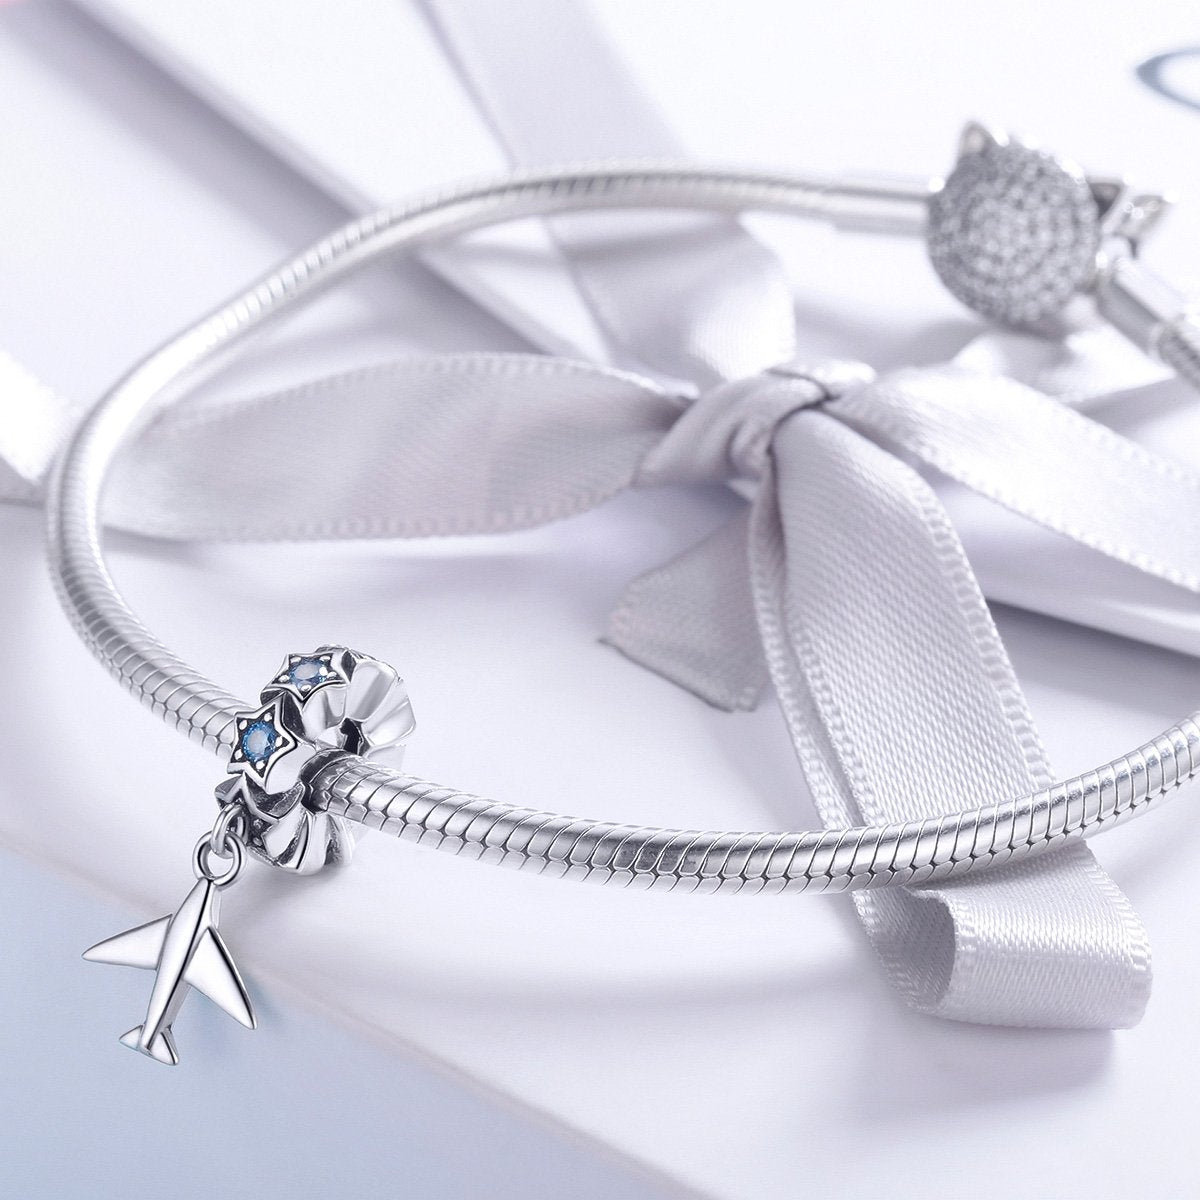 Sterling 925 silver charm the airplane circle pendant fits Pandora charm and European charm bracelet Xaxe.com